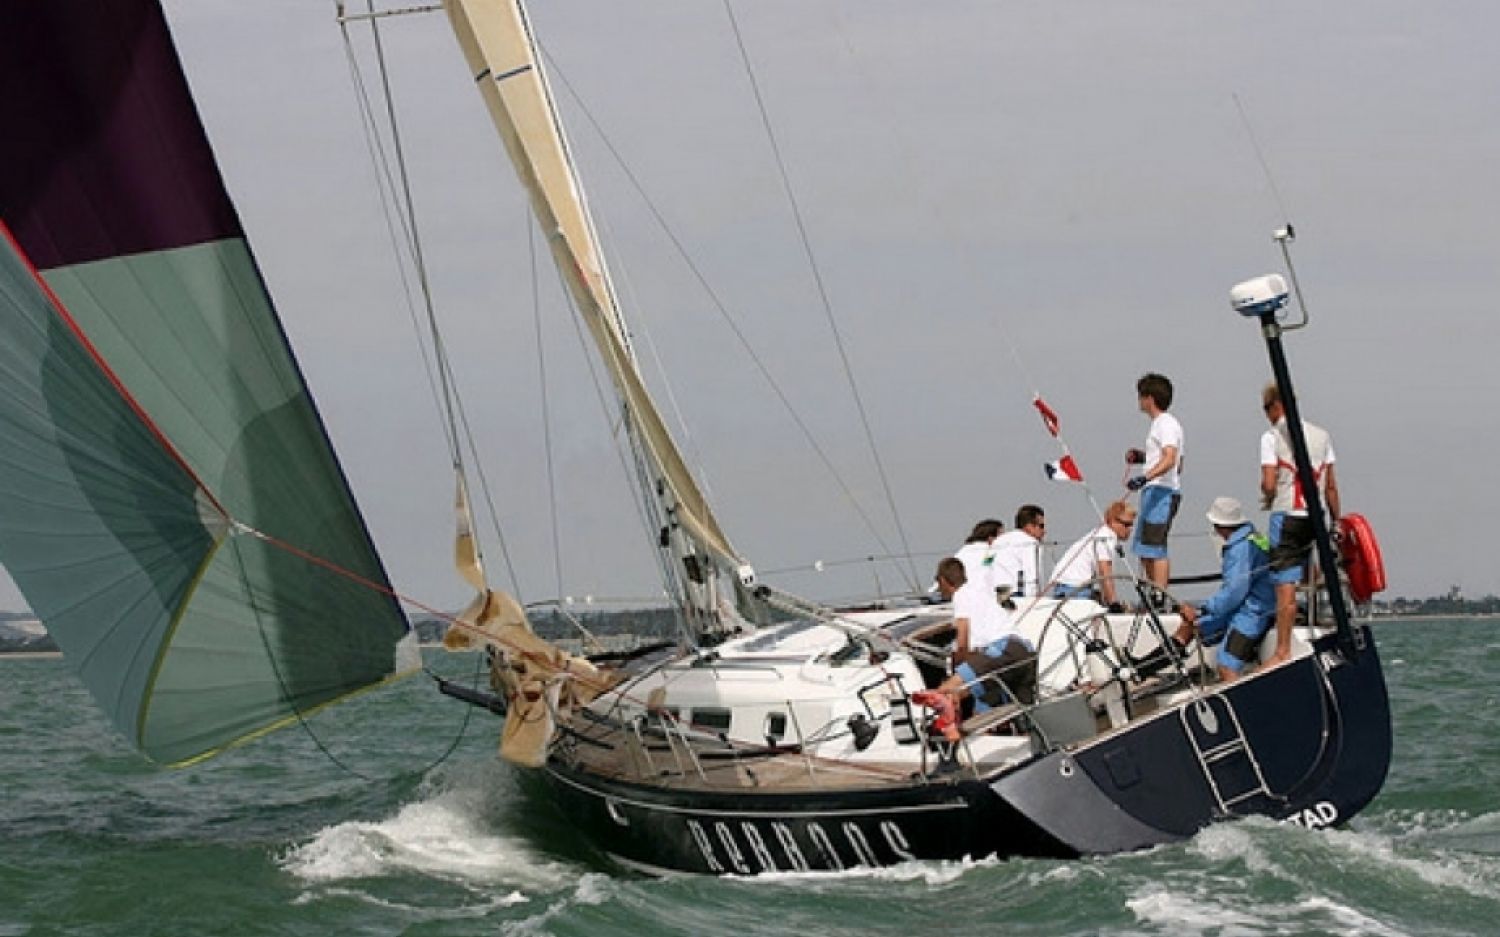 Beluga 40 Satellite Yacht Design, Zeiljacht for sale by HollandBoat International Yachtbrokers